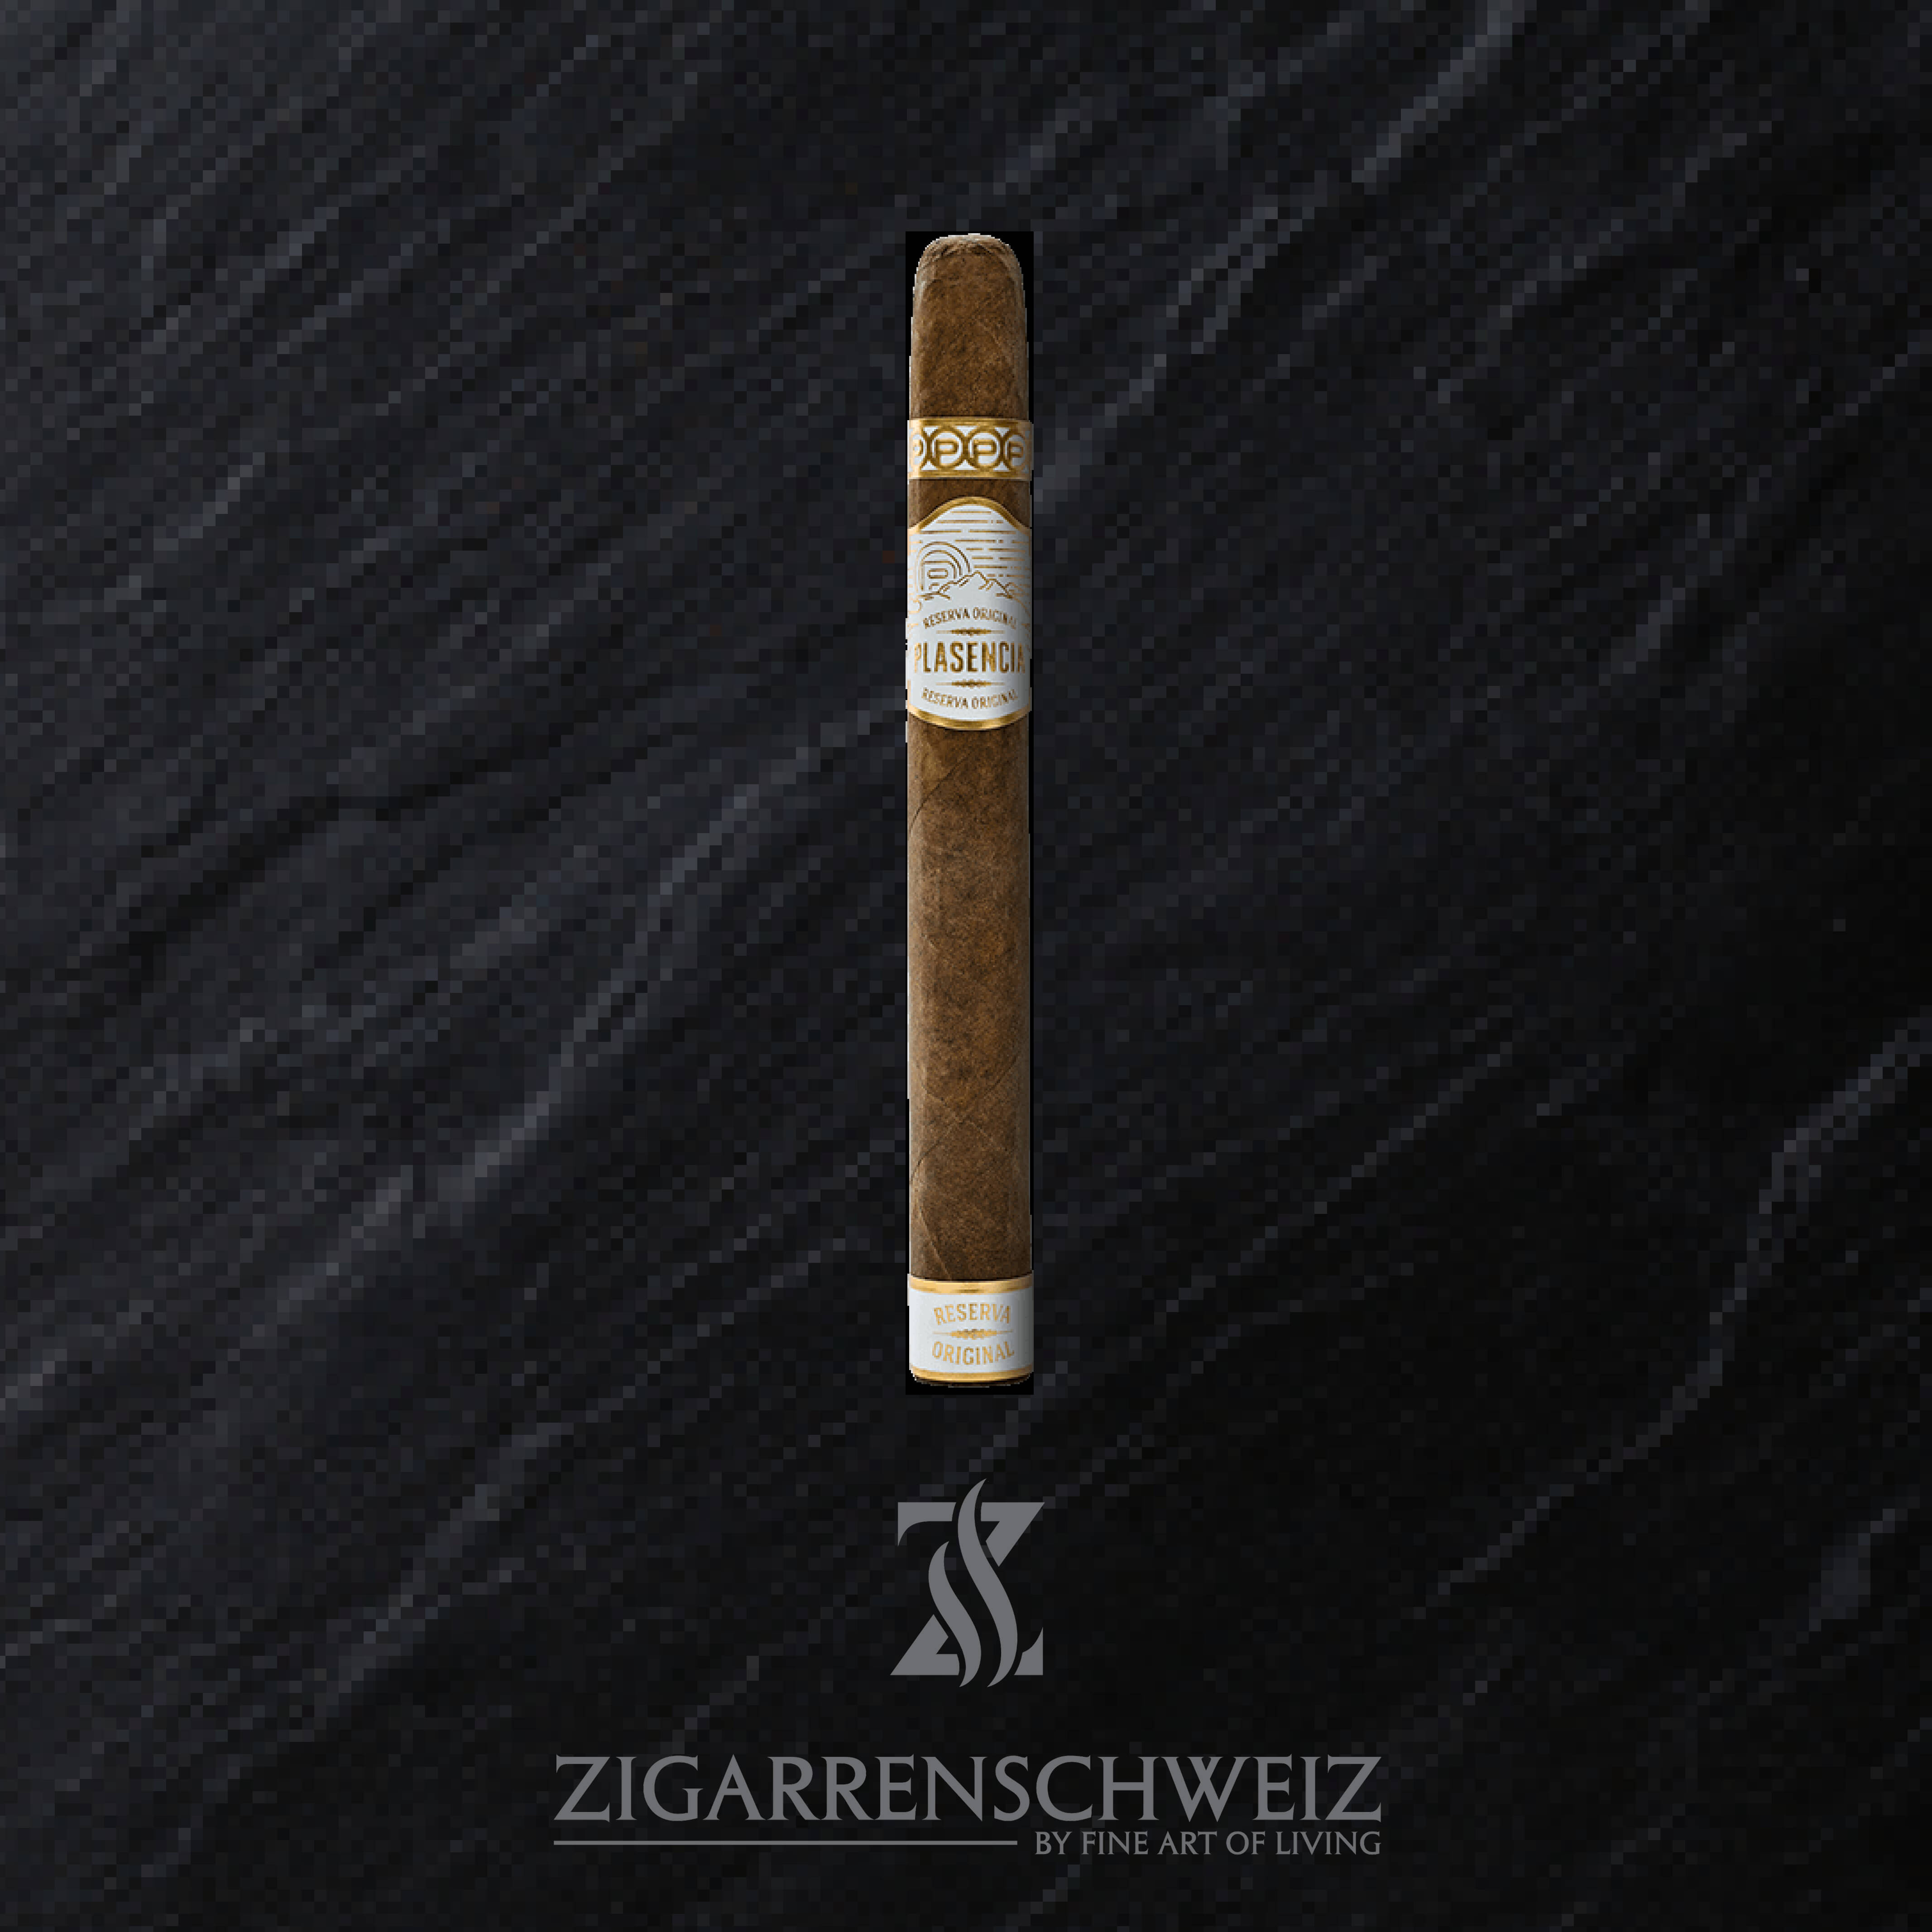 Plasencia Reserva Original Zigarre